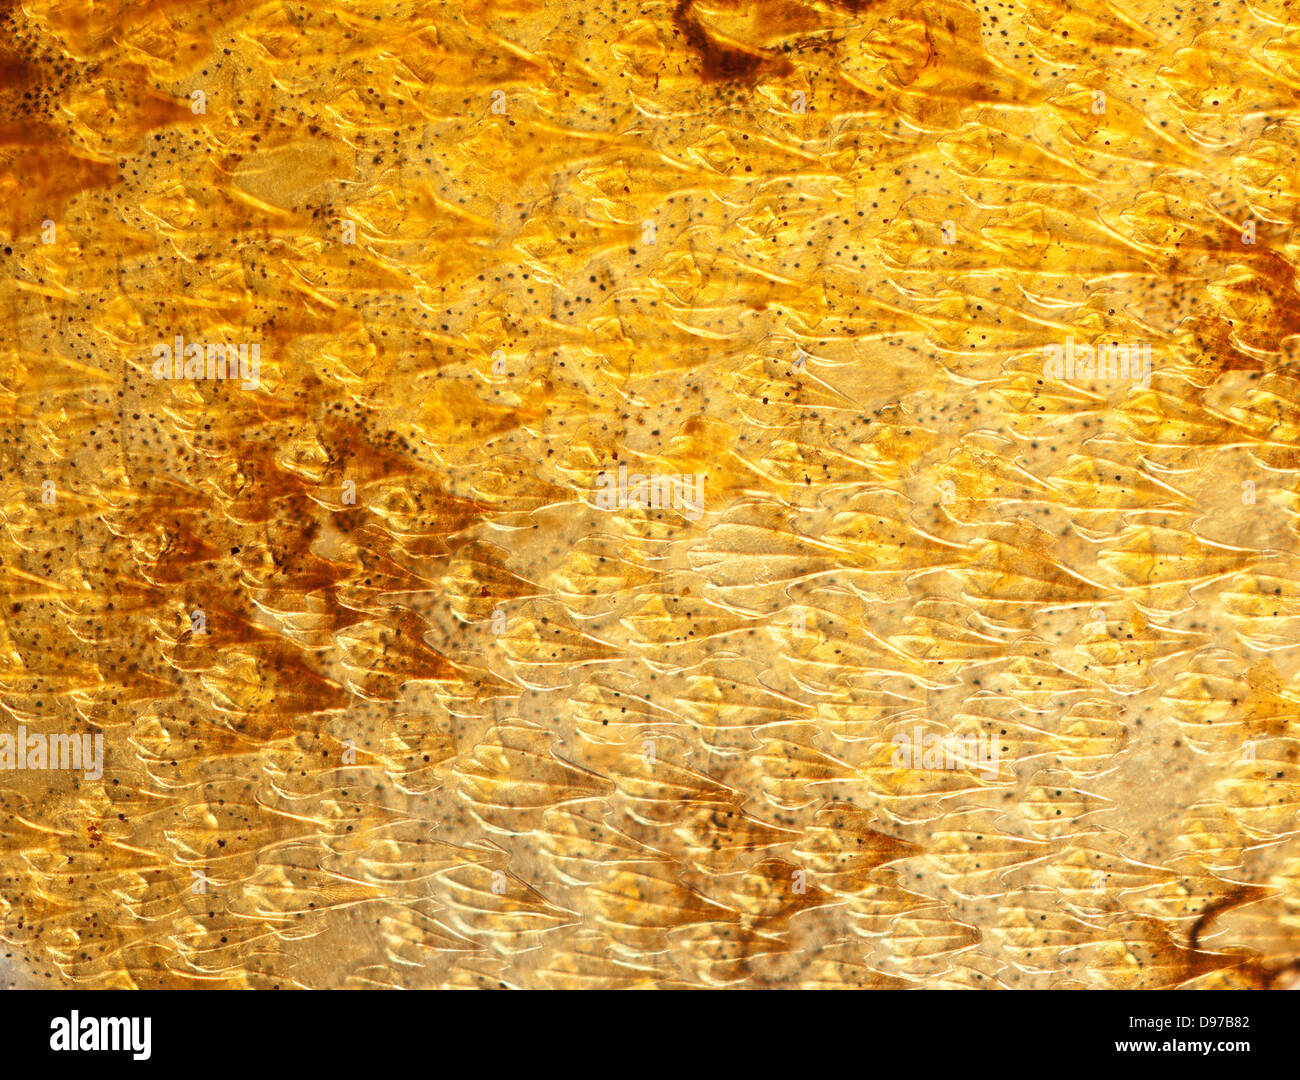 Dogfish, Squalus acanthias. Skin macro close-up, transmitted light Stock Photo